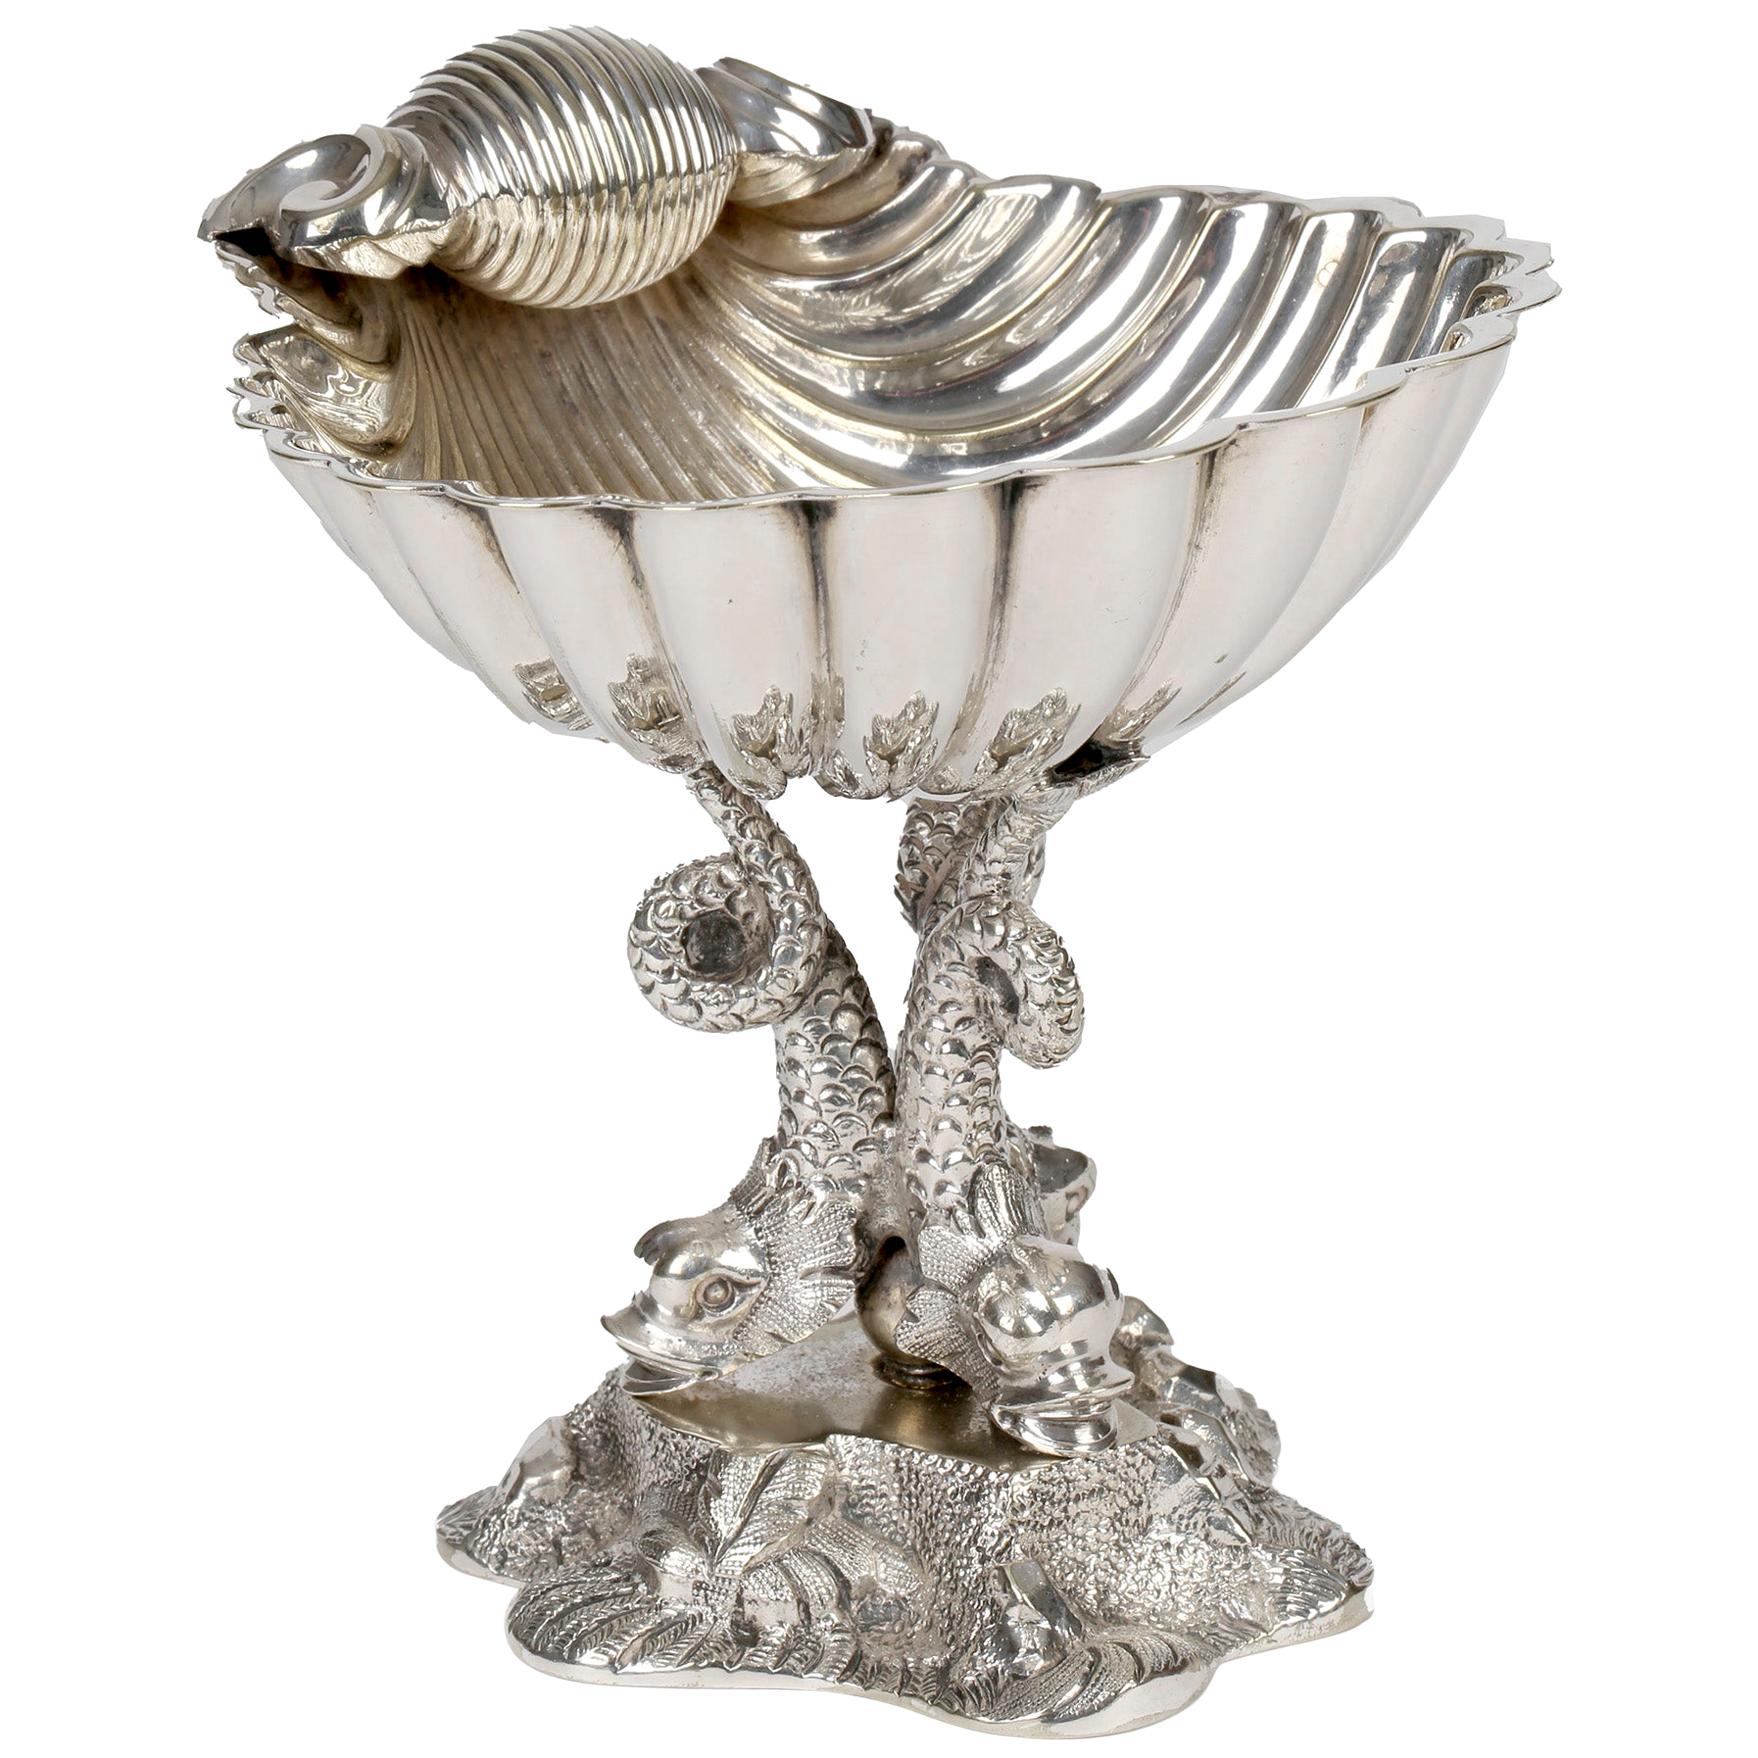 William Hutton Aesthetic Movement Silver Plated Clam Shell Bon-Bon Dish